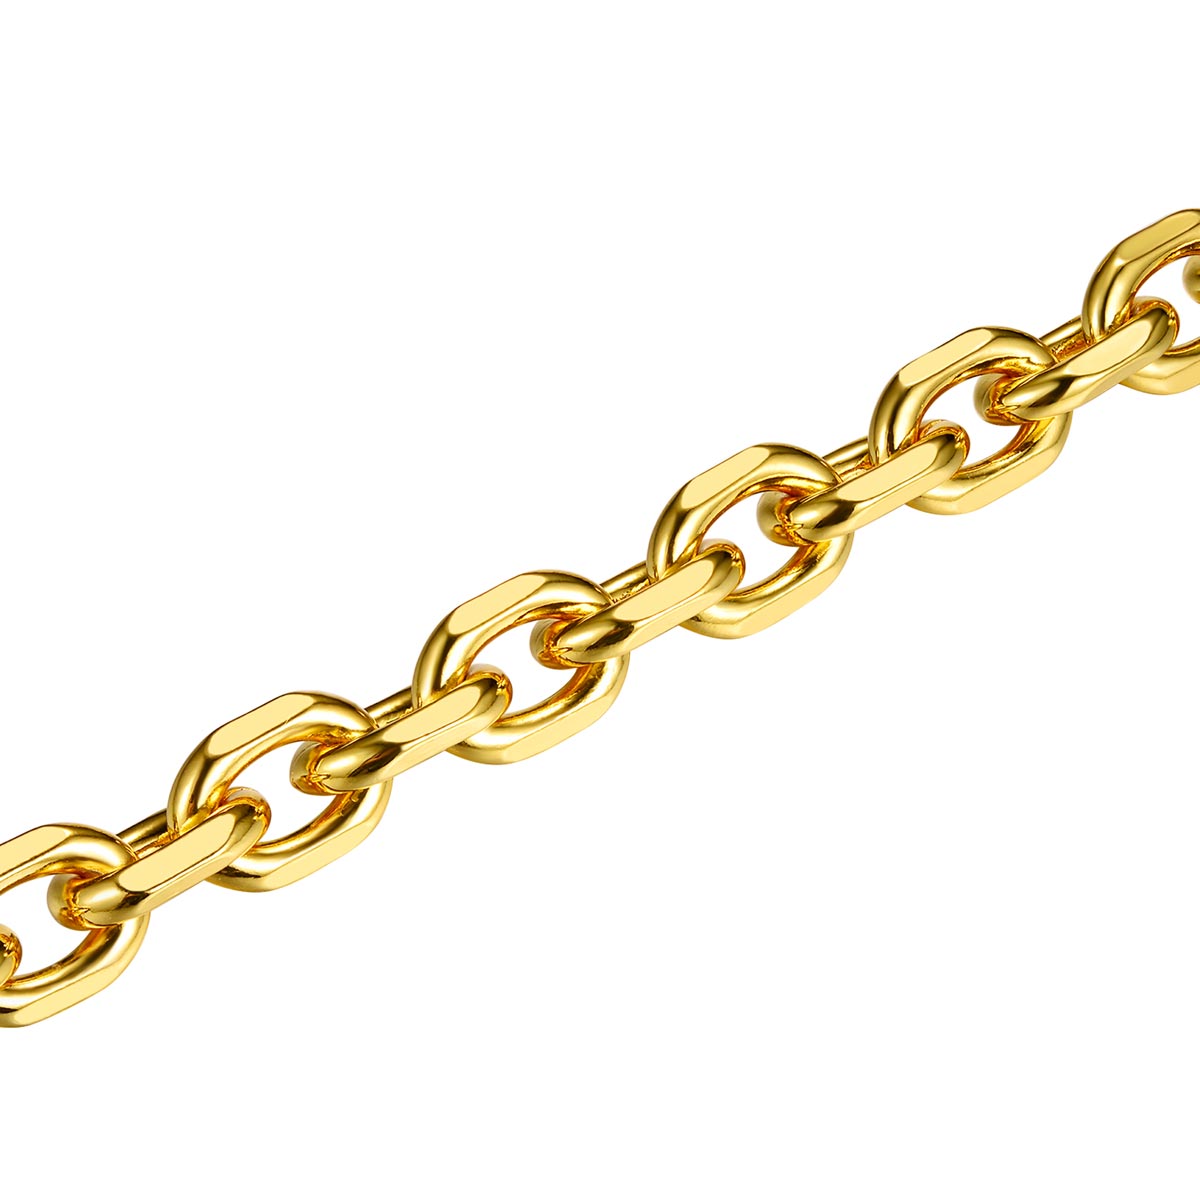 bold gold chain, close up